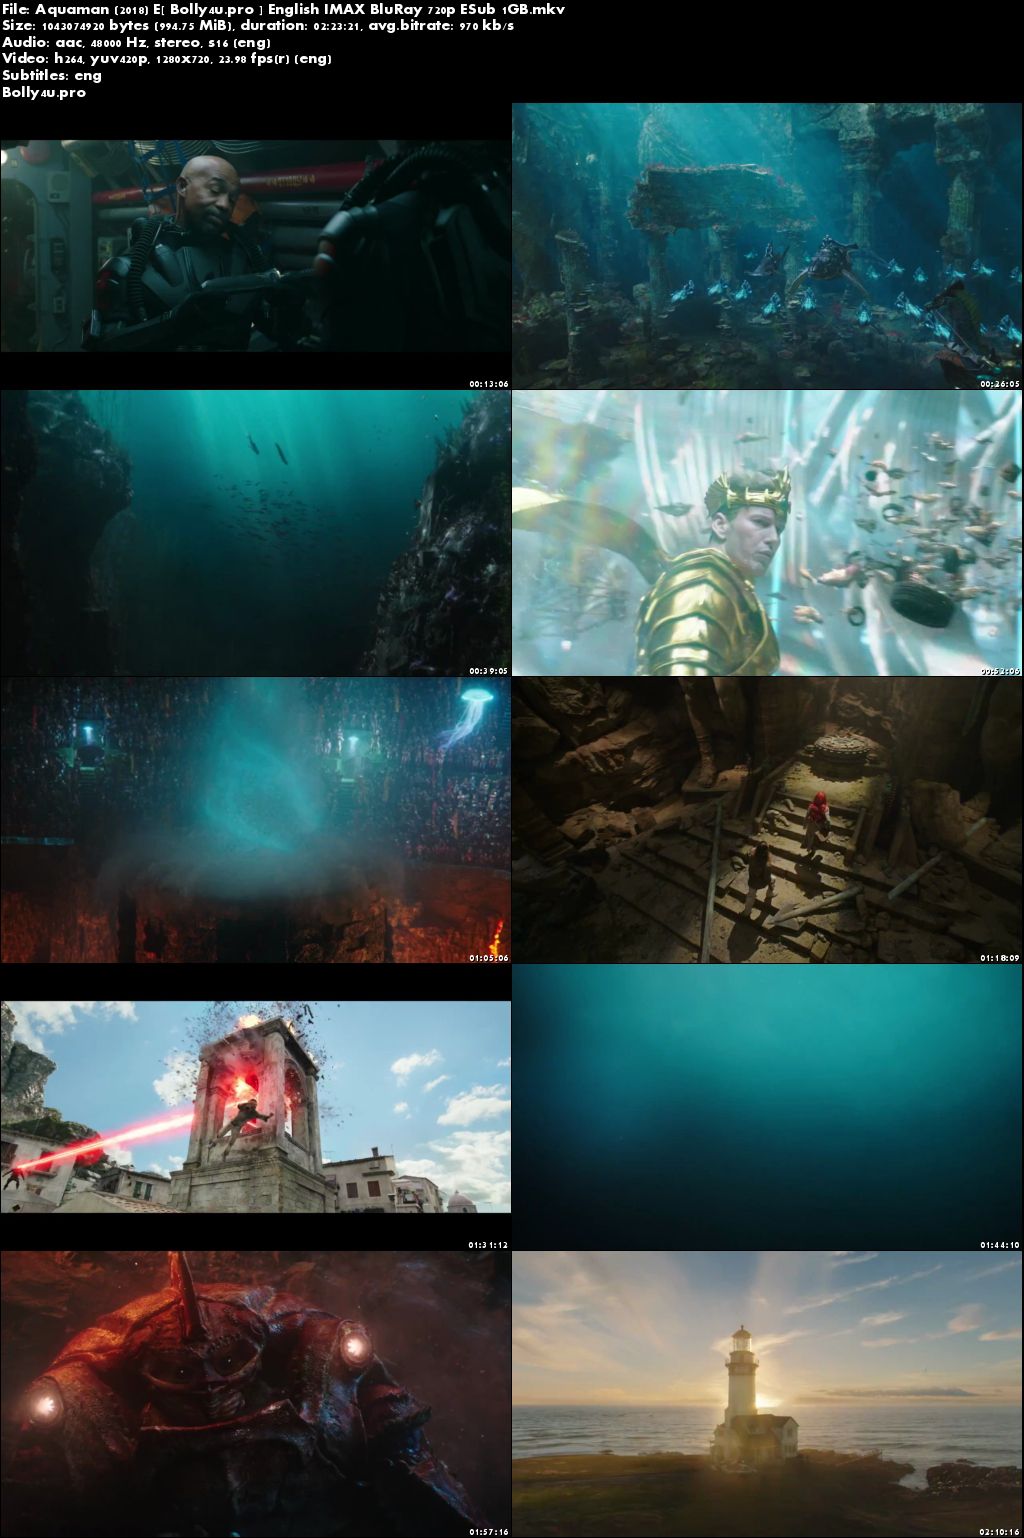 Aquaman 2018 BRRip 1GB English IMAX 720p ESubs Download